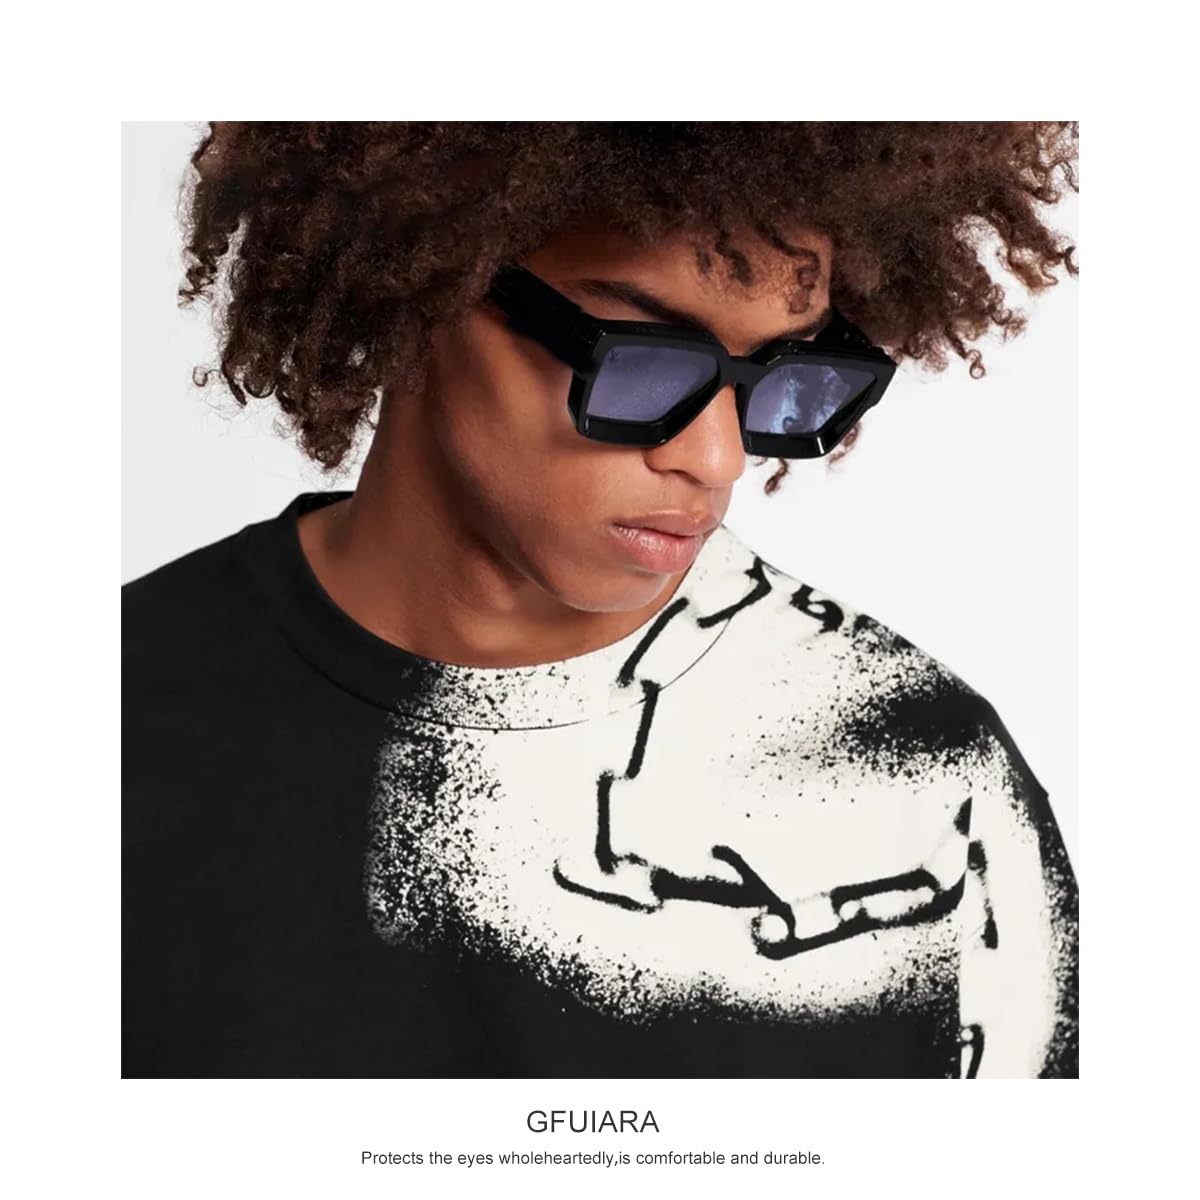 Trendy Square Sunglasses for Men Women Fashion Thick Rectangle Sun Glasses UV Protection Shades Designer Style